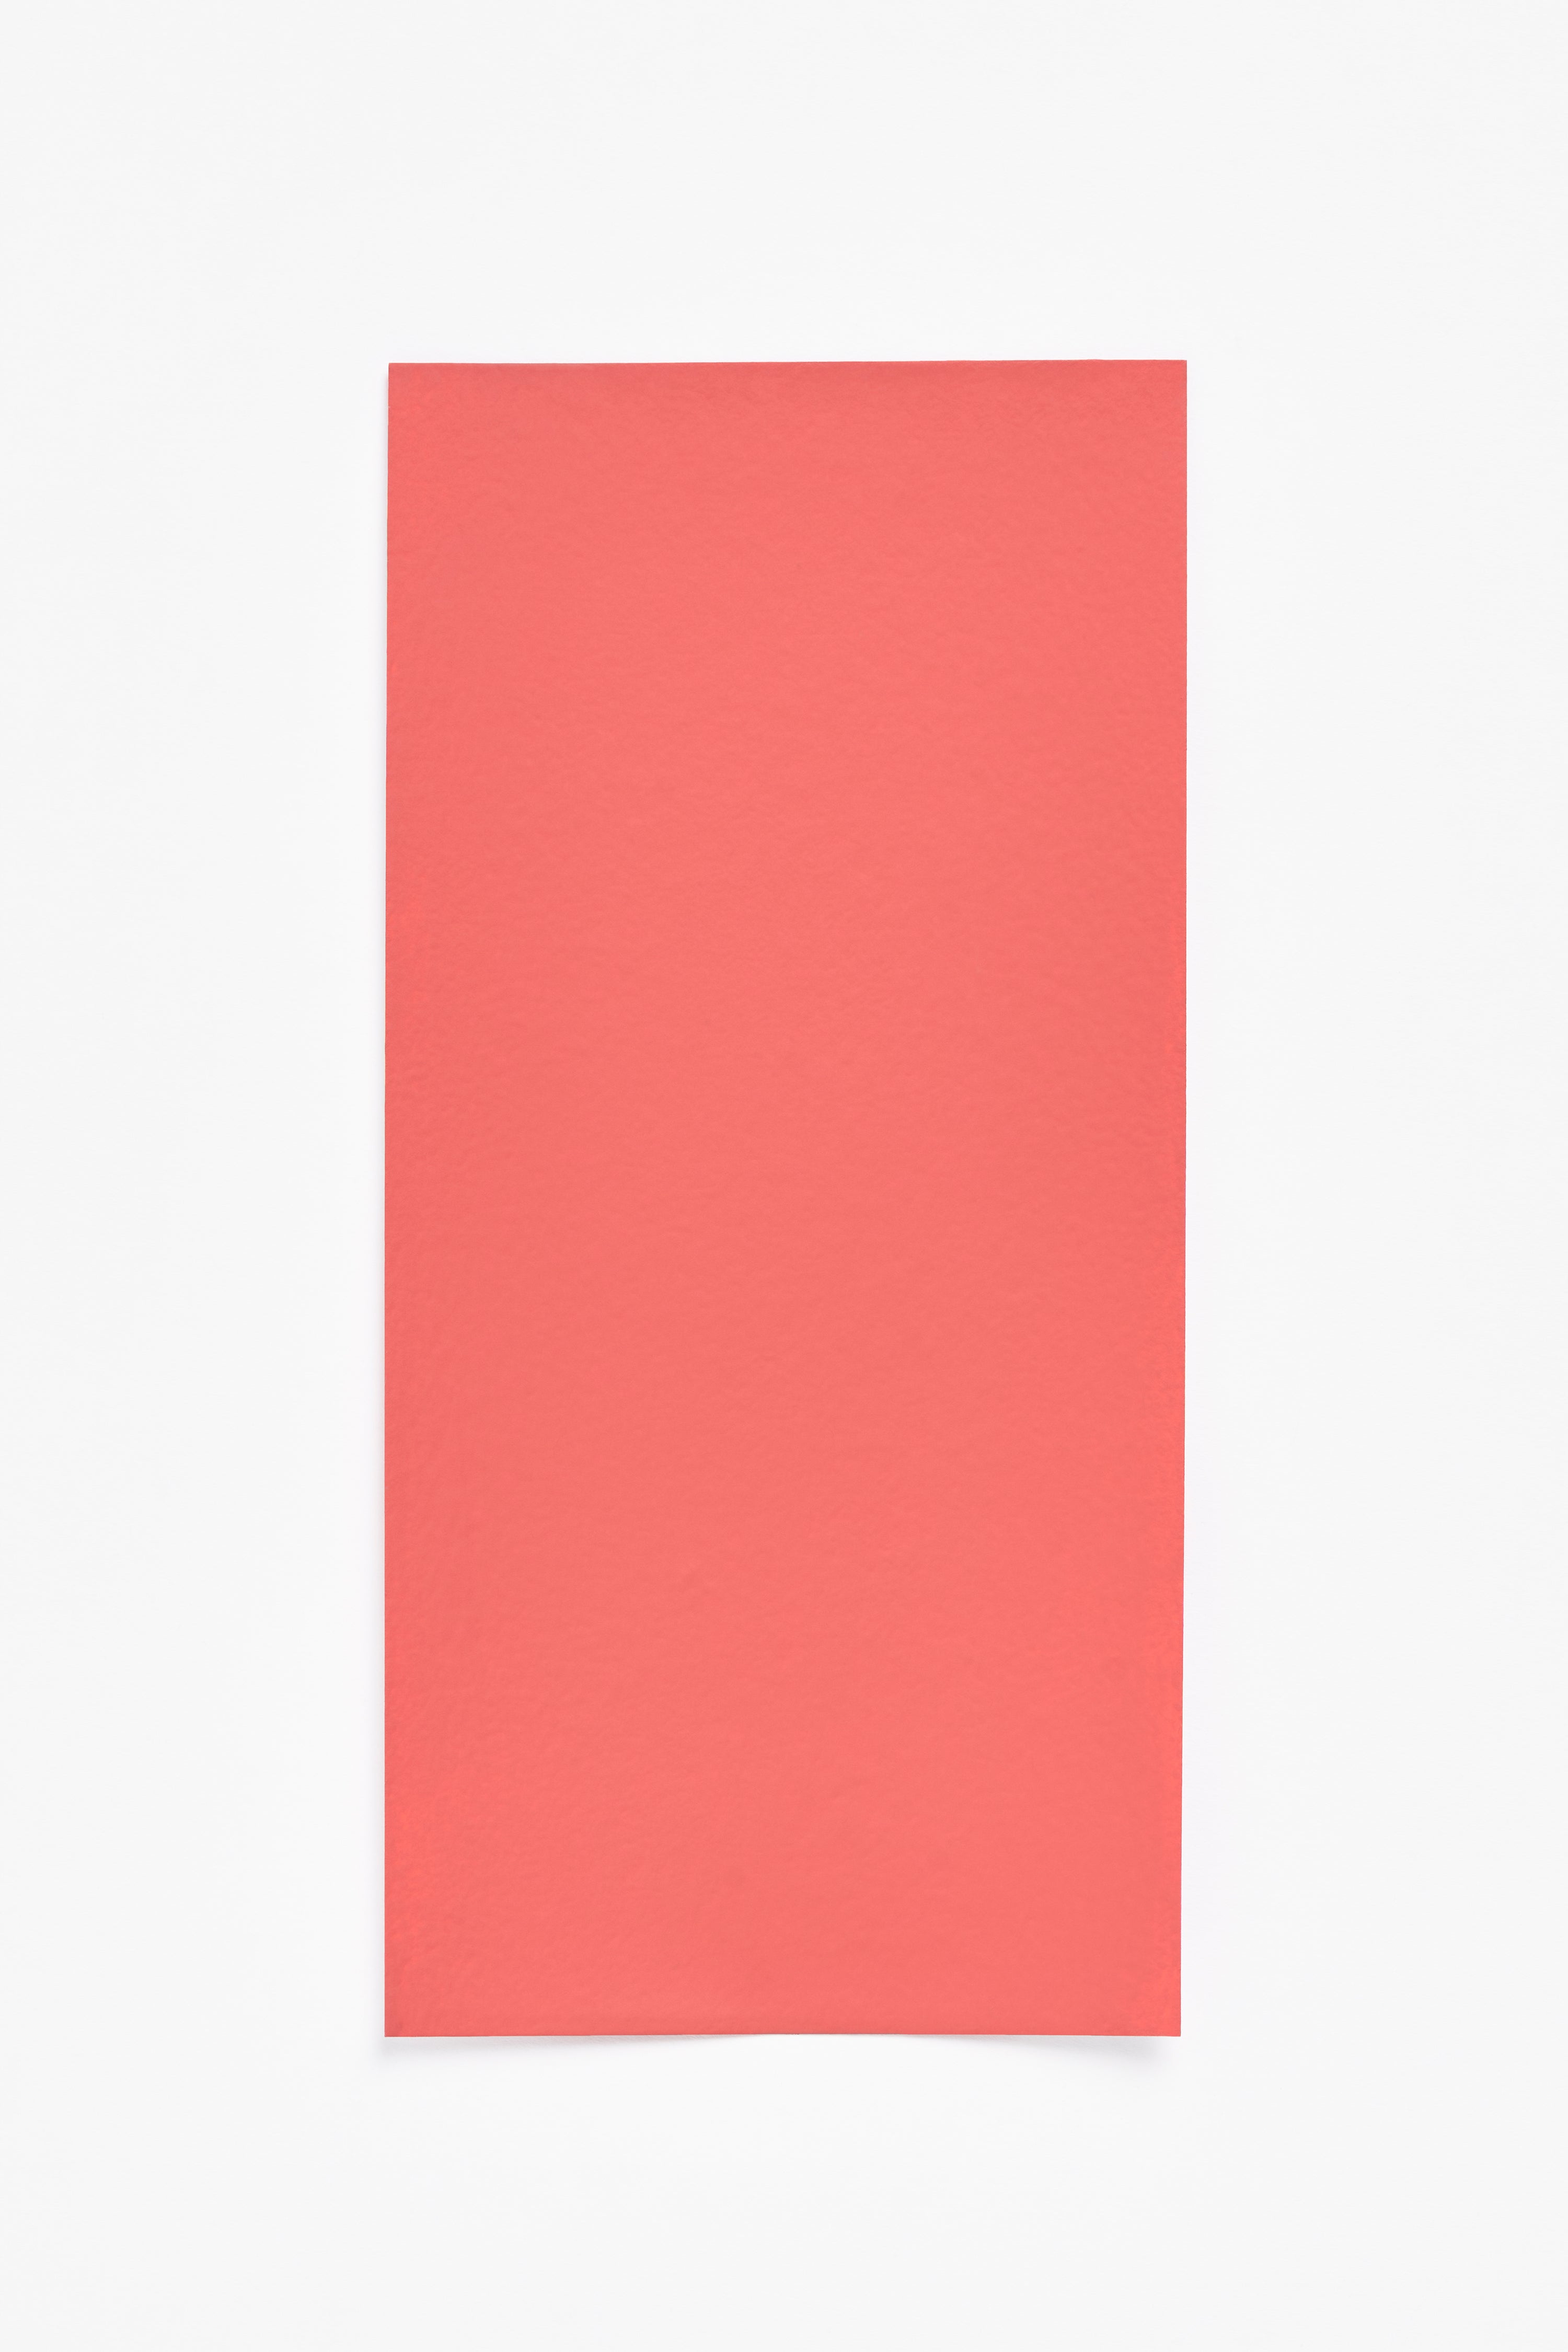 Vermillion — a paint colour developed by Barber Osgerby for Blēo